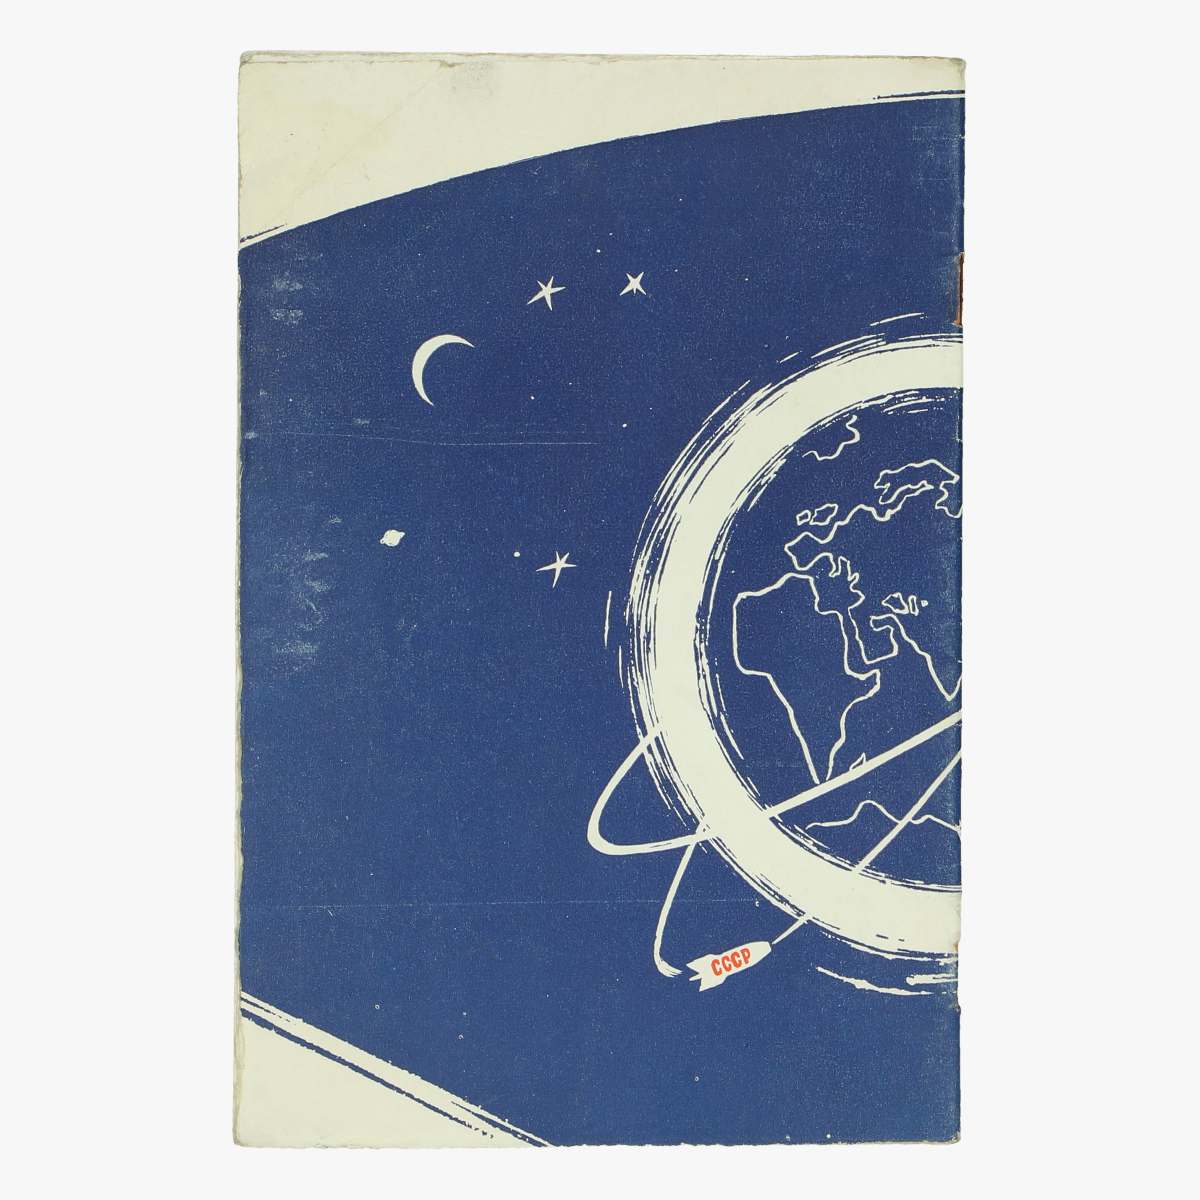 Afbeeldingen van boekje 1958 the first soviet sputniks urss